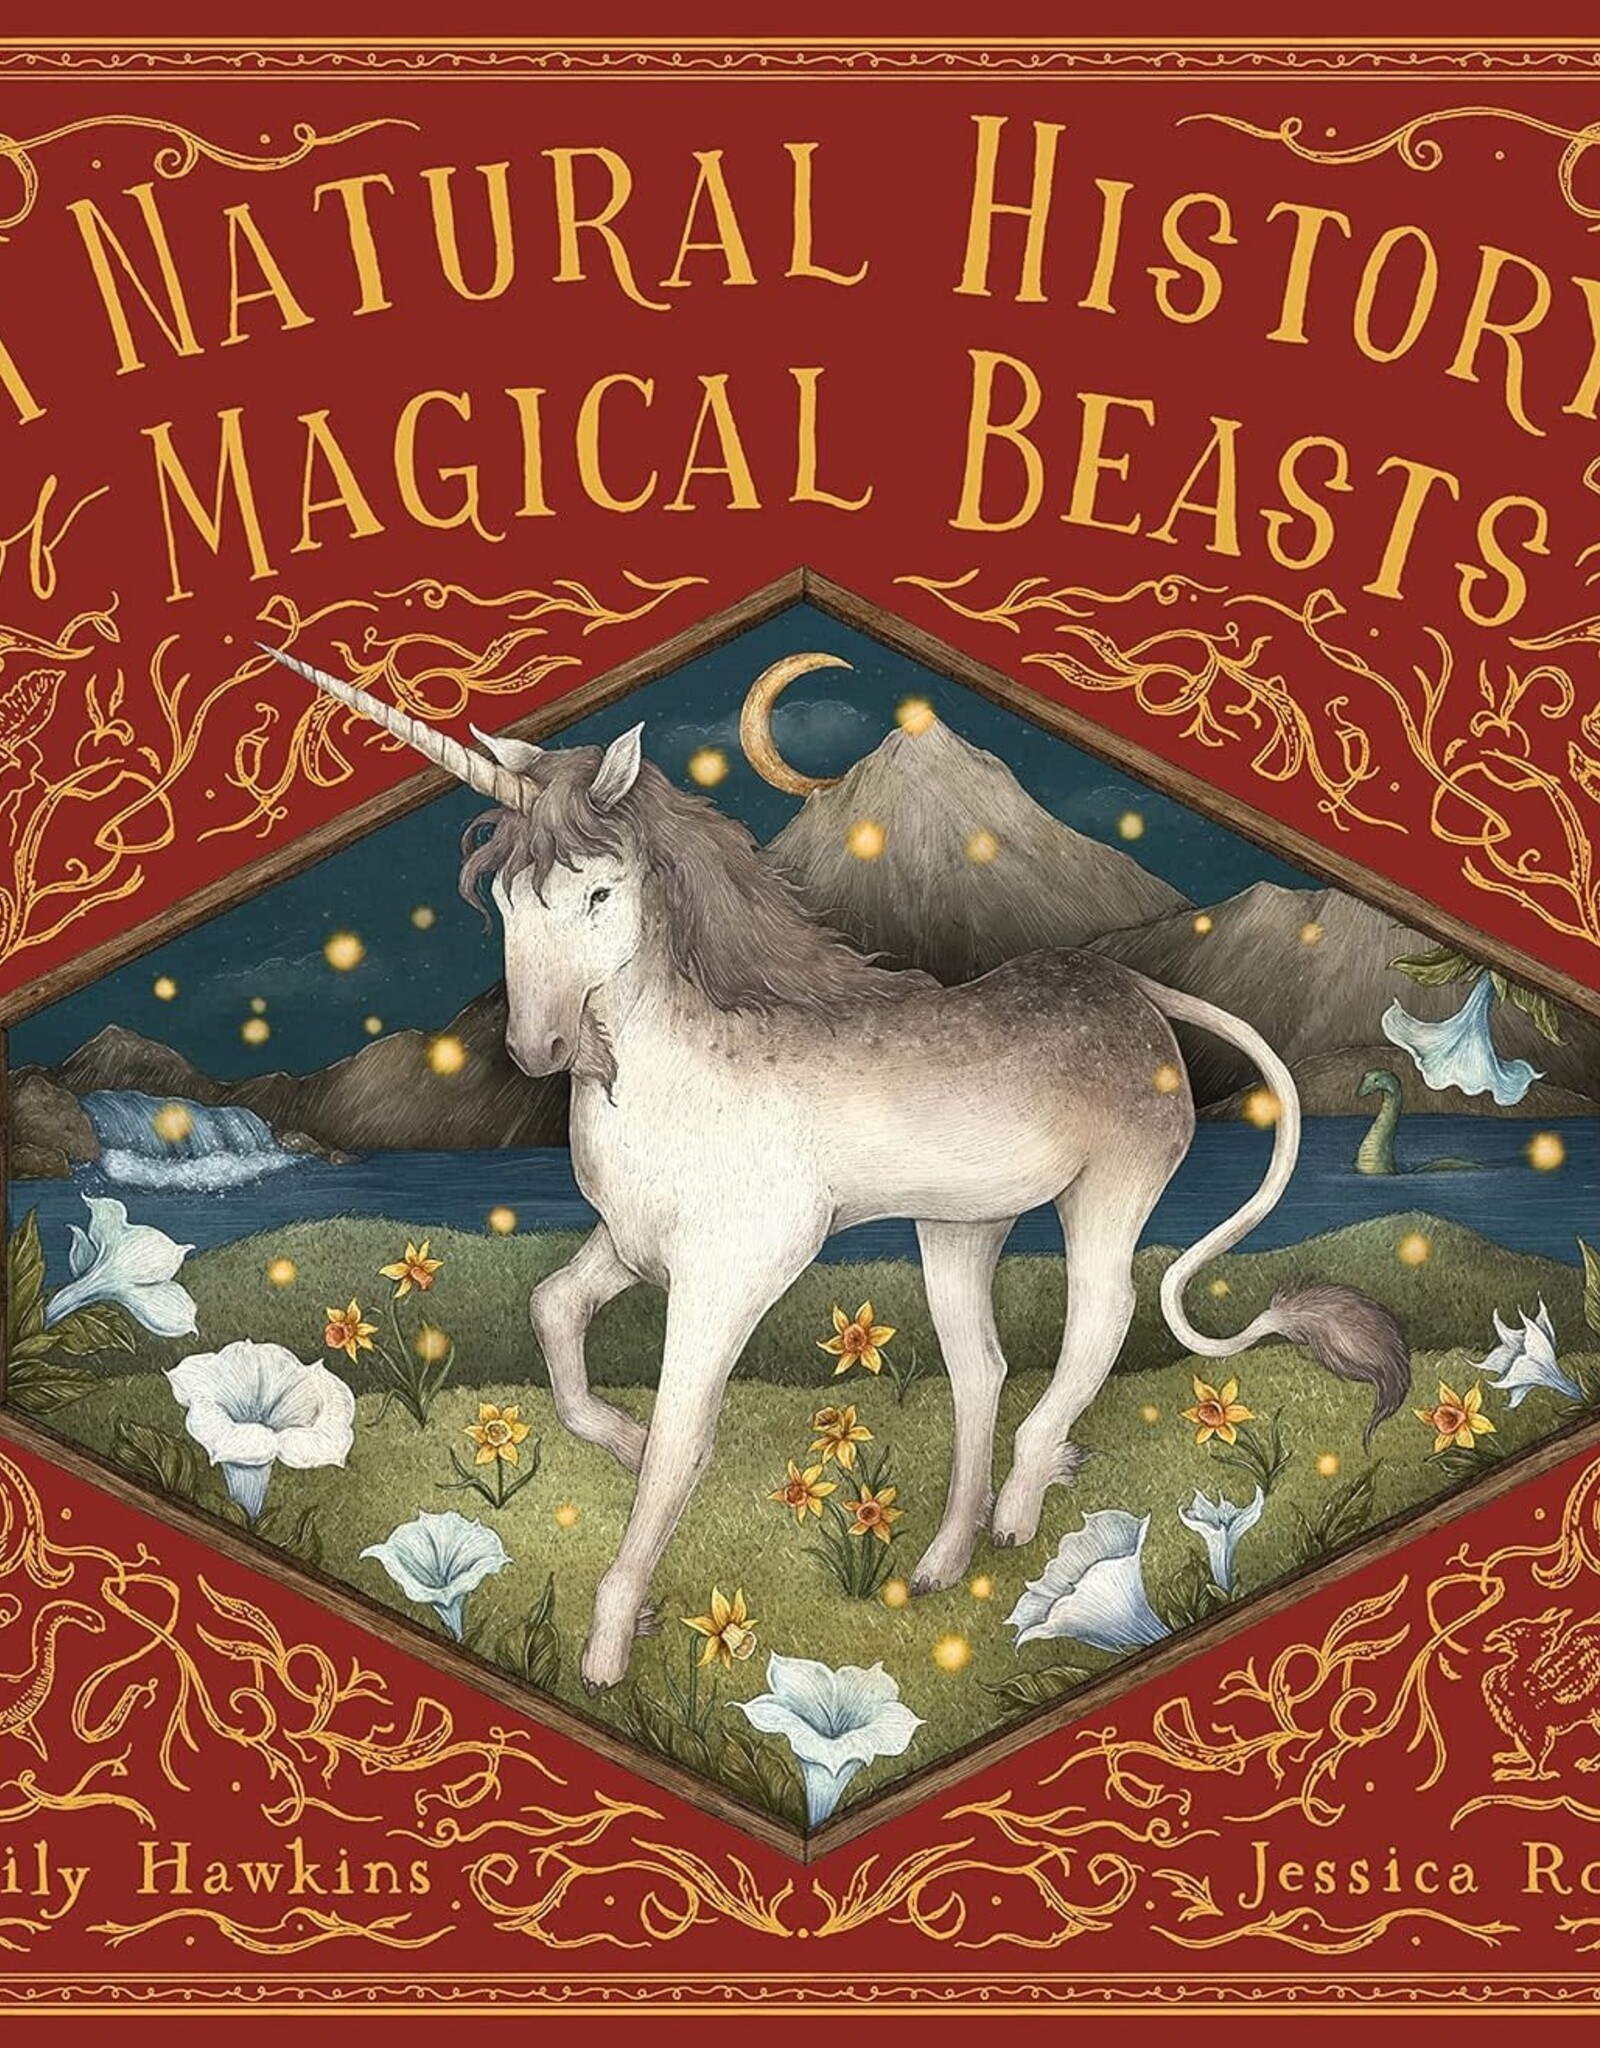 Quarto A Natural History of Magical Beasts